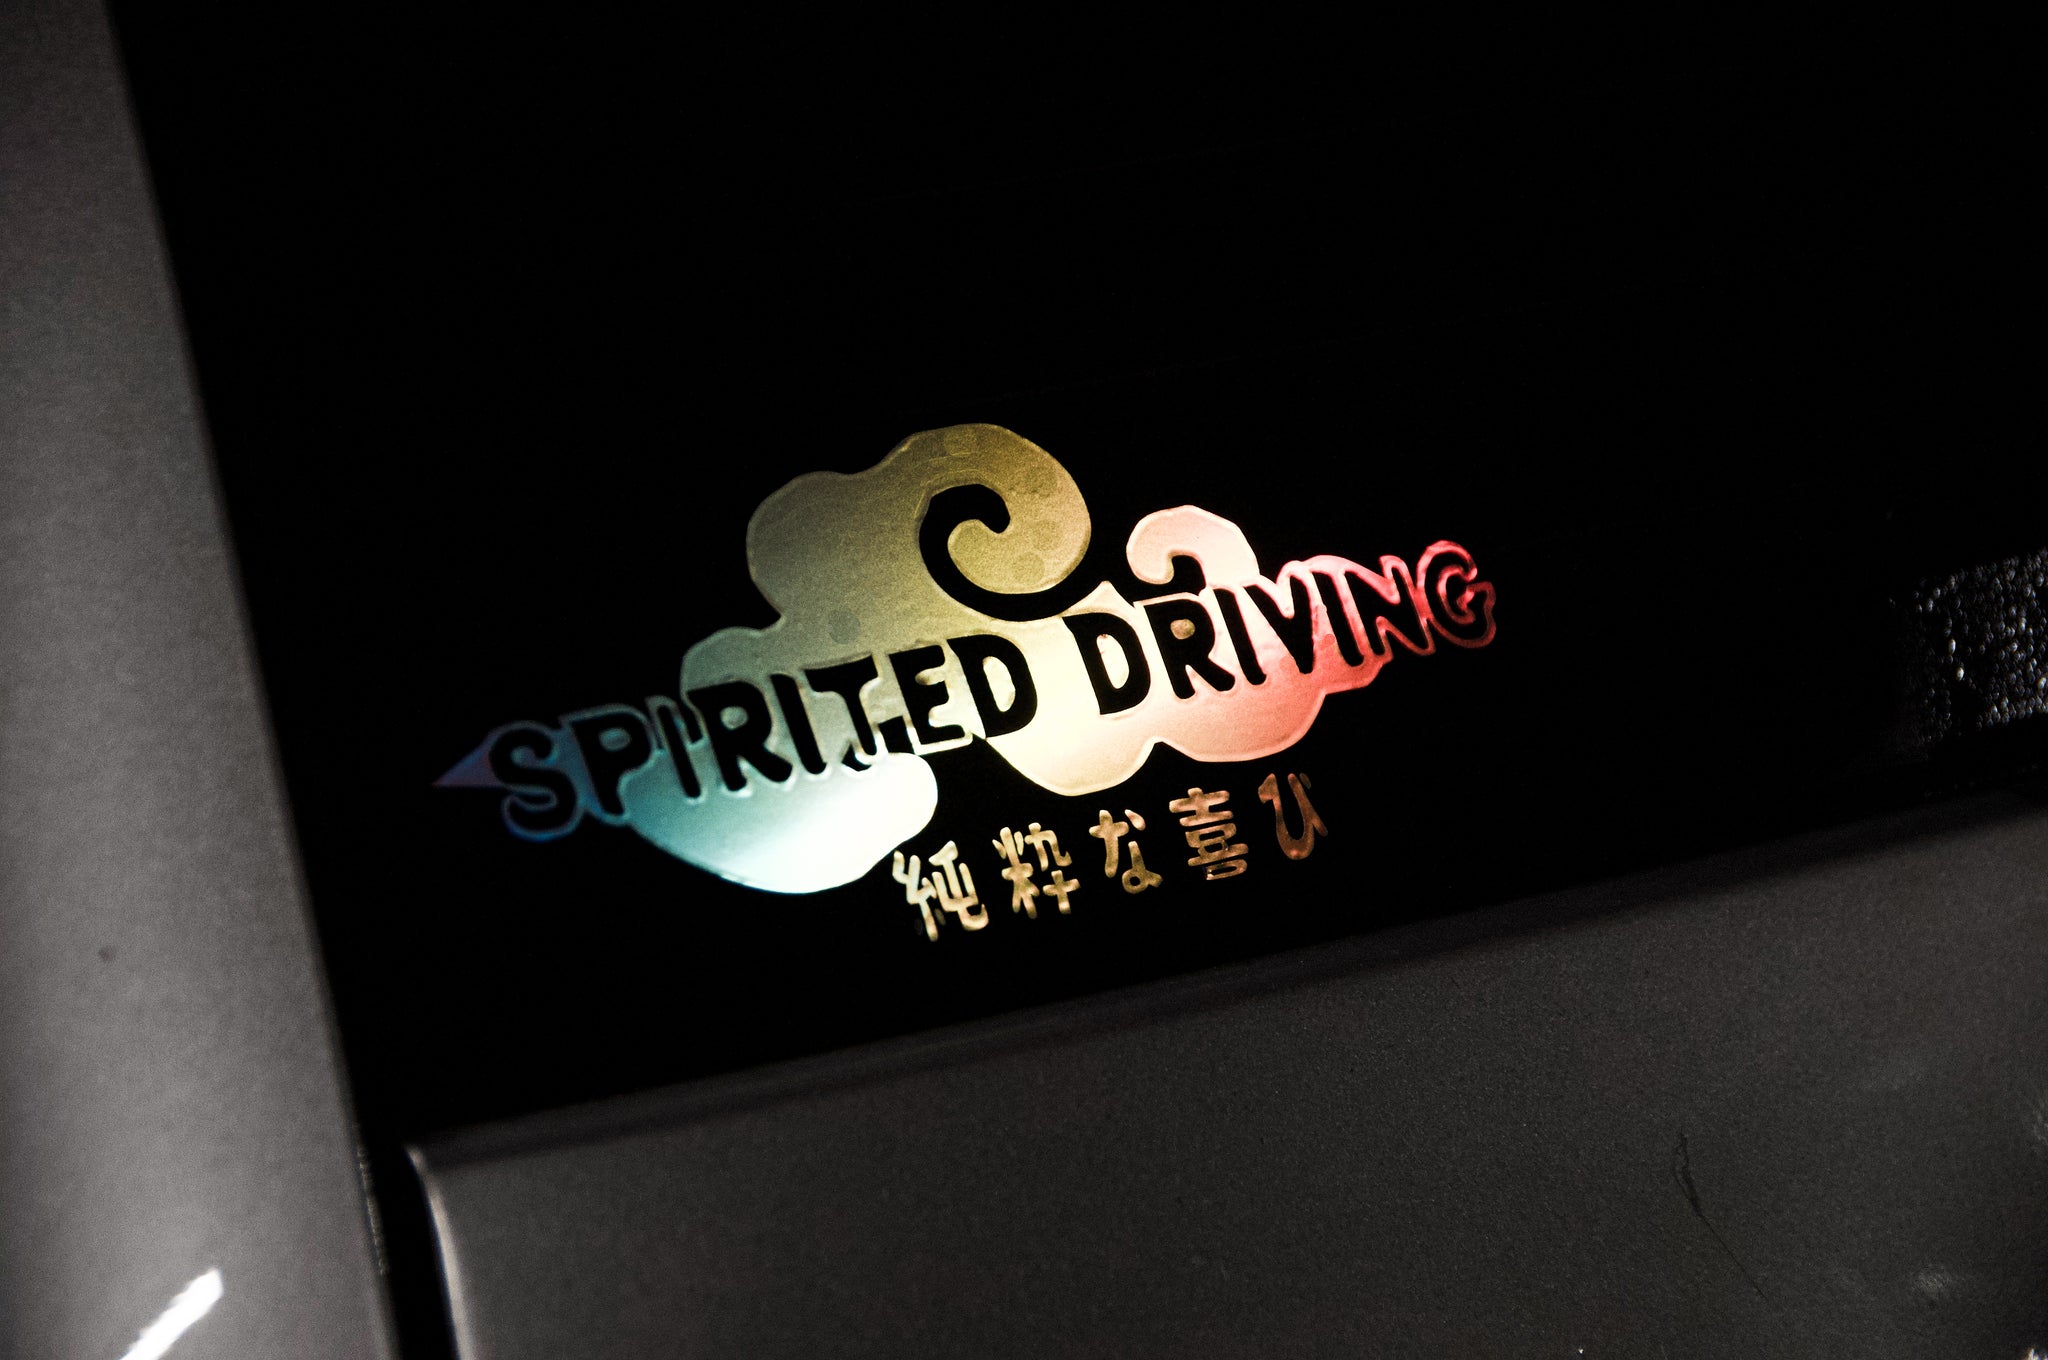 Spirited Driving (純粋な喜び) | Decal